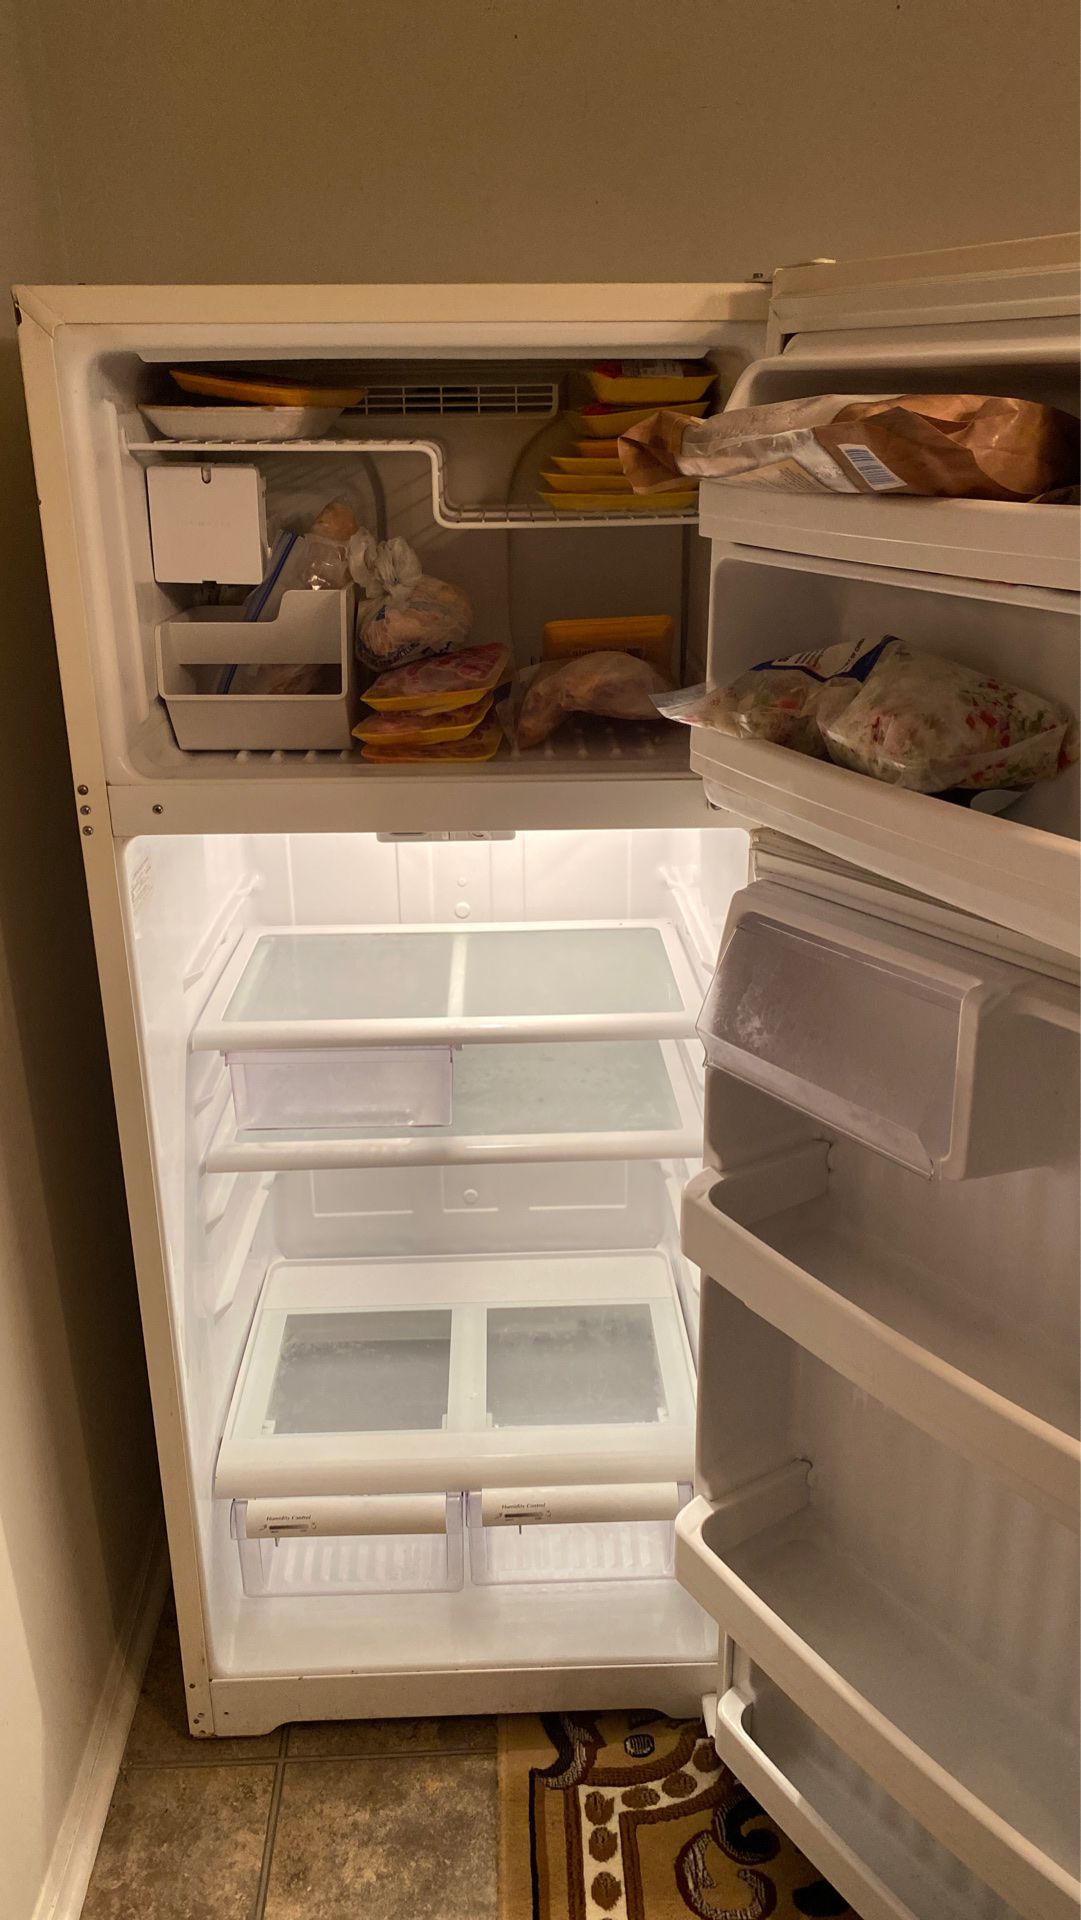 GE, refrigerator